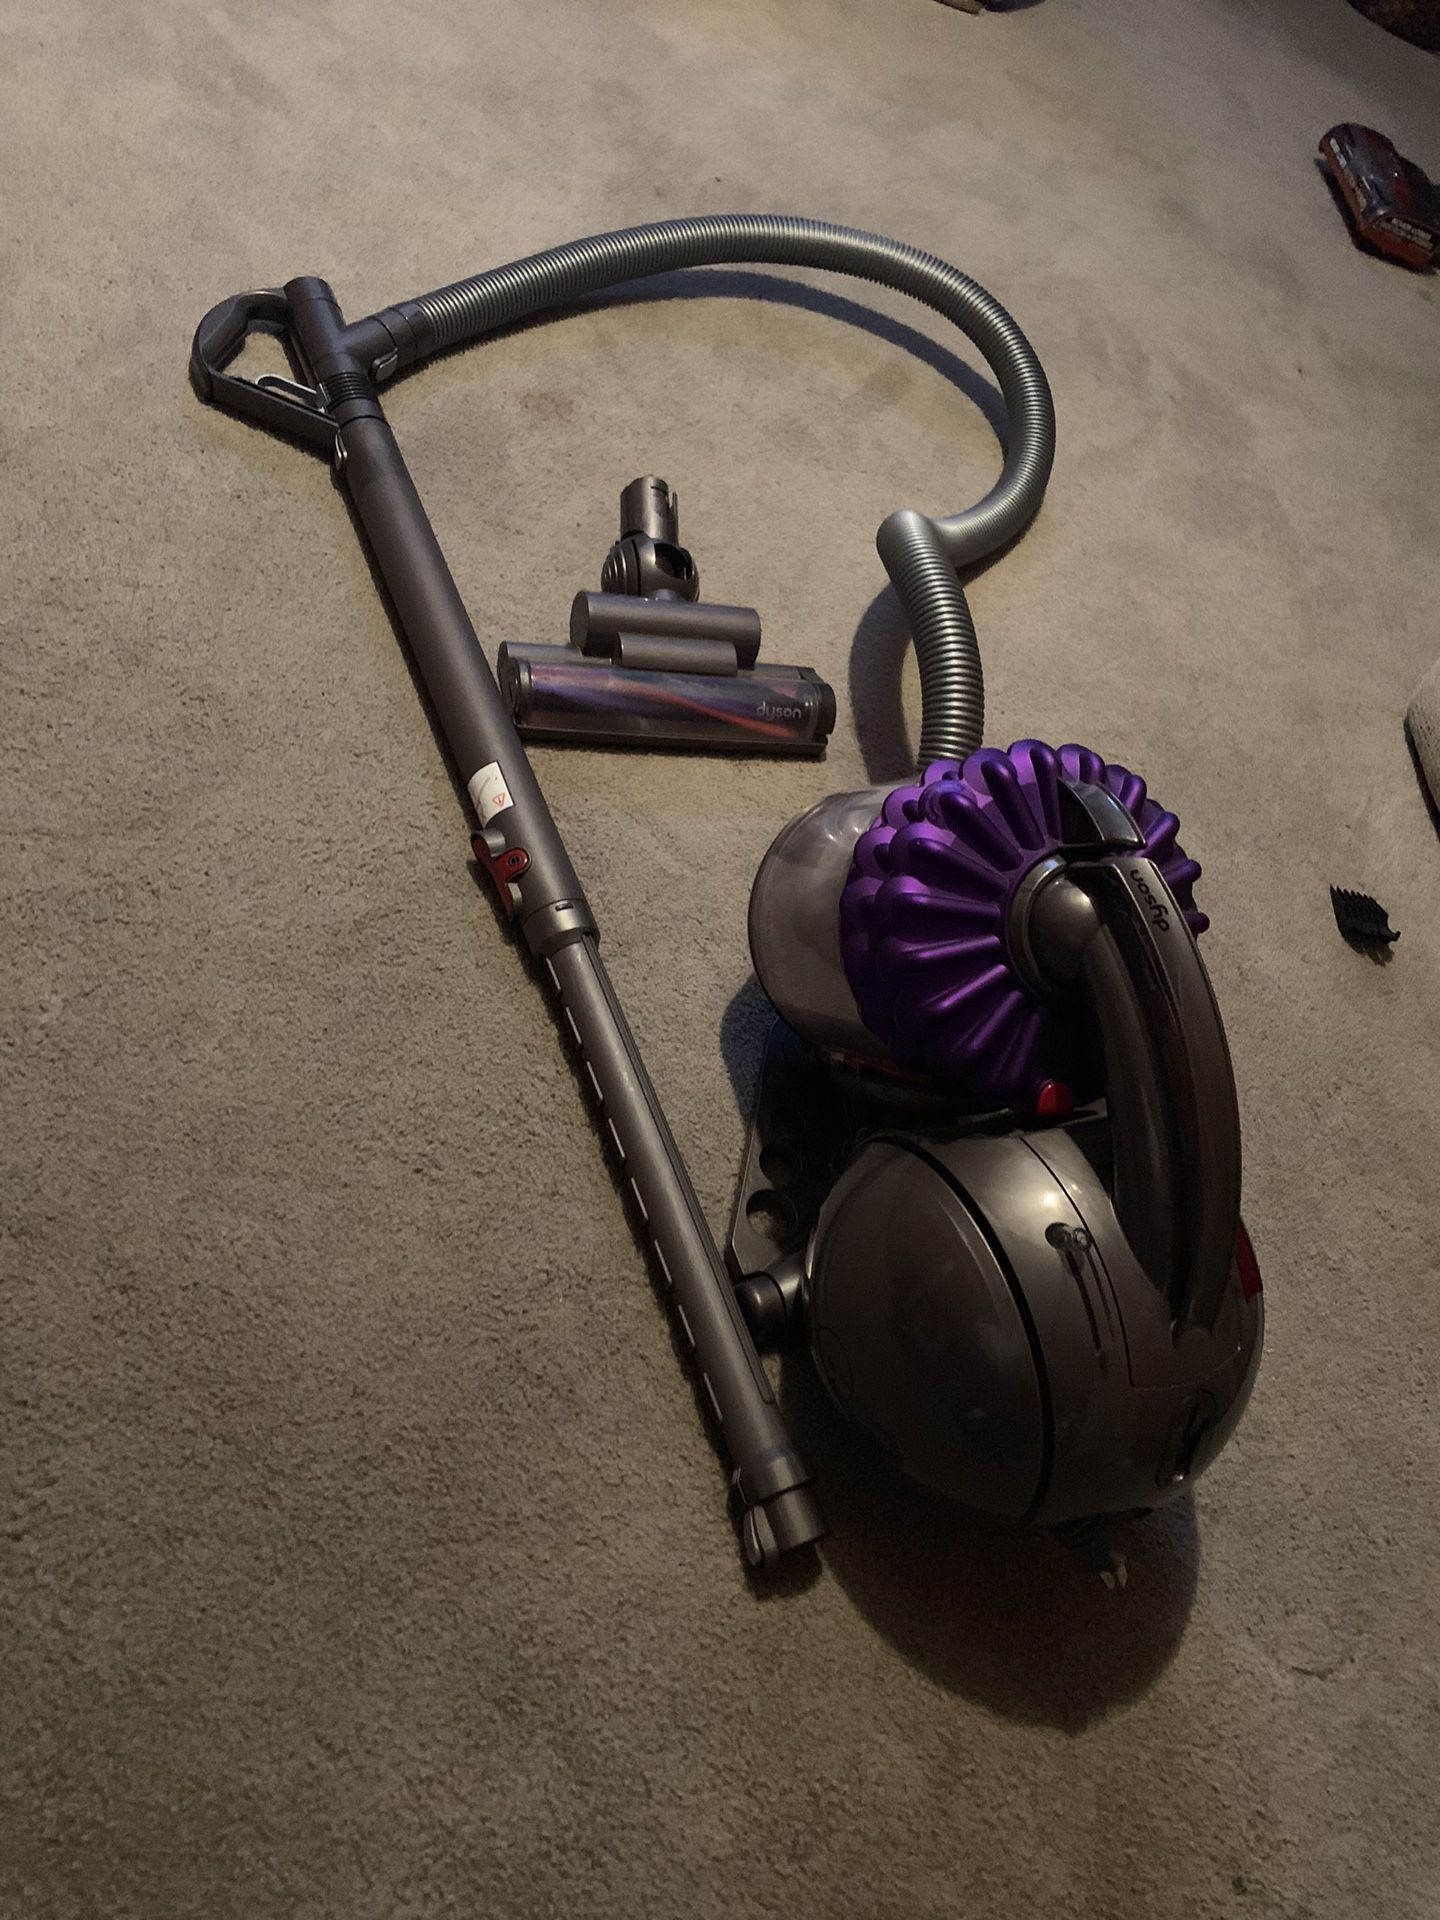 Dyson ball vacuum